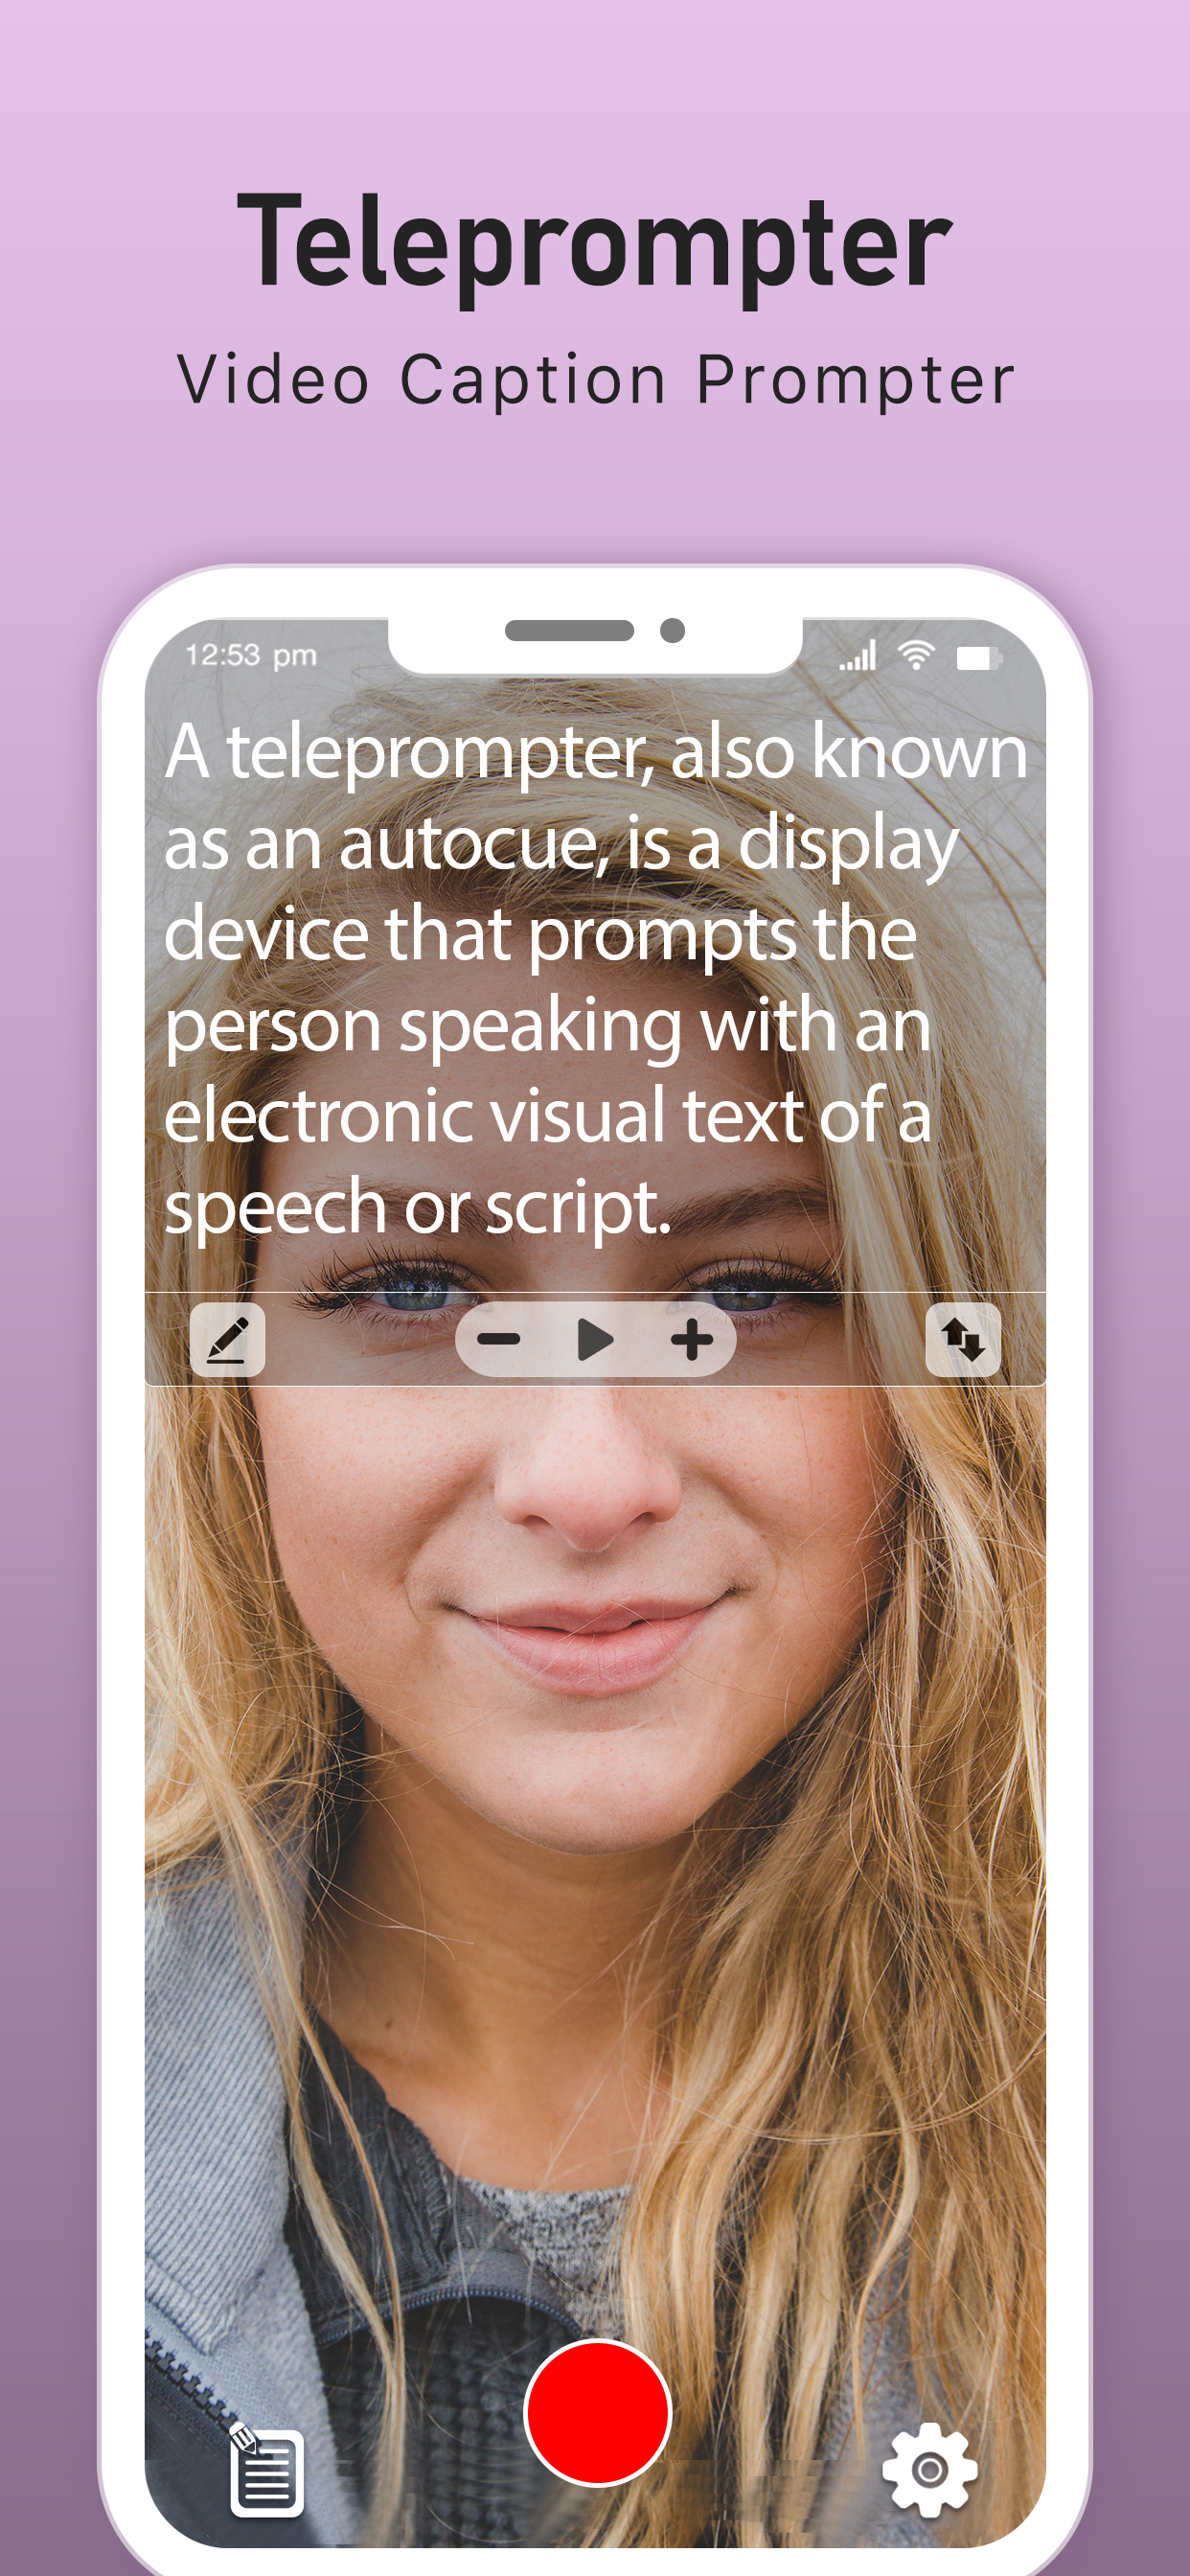 Teleprompter for Video Script